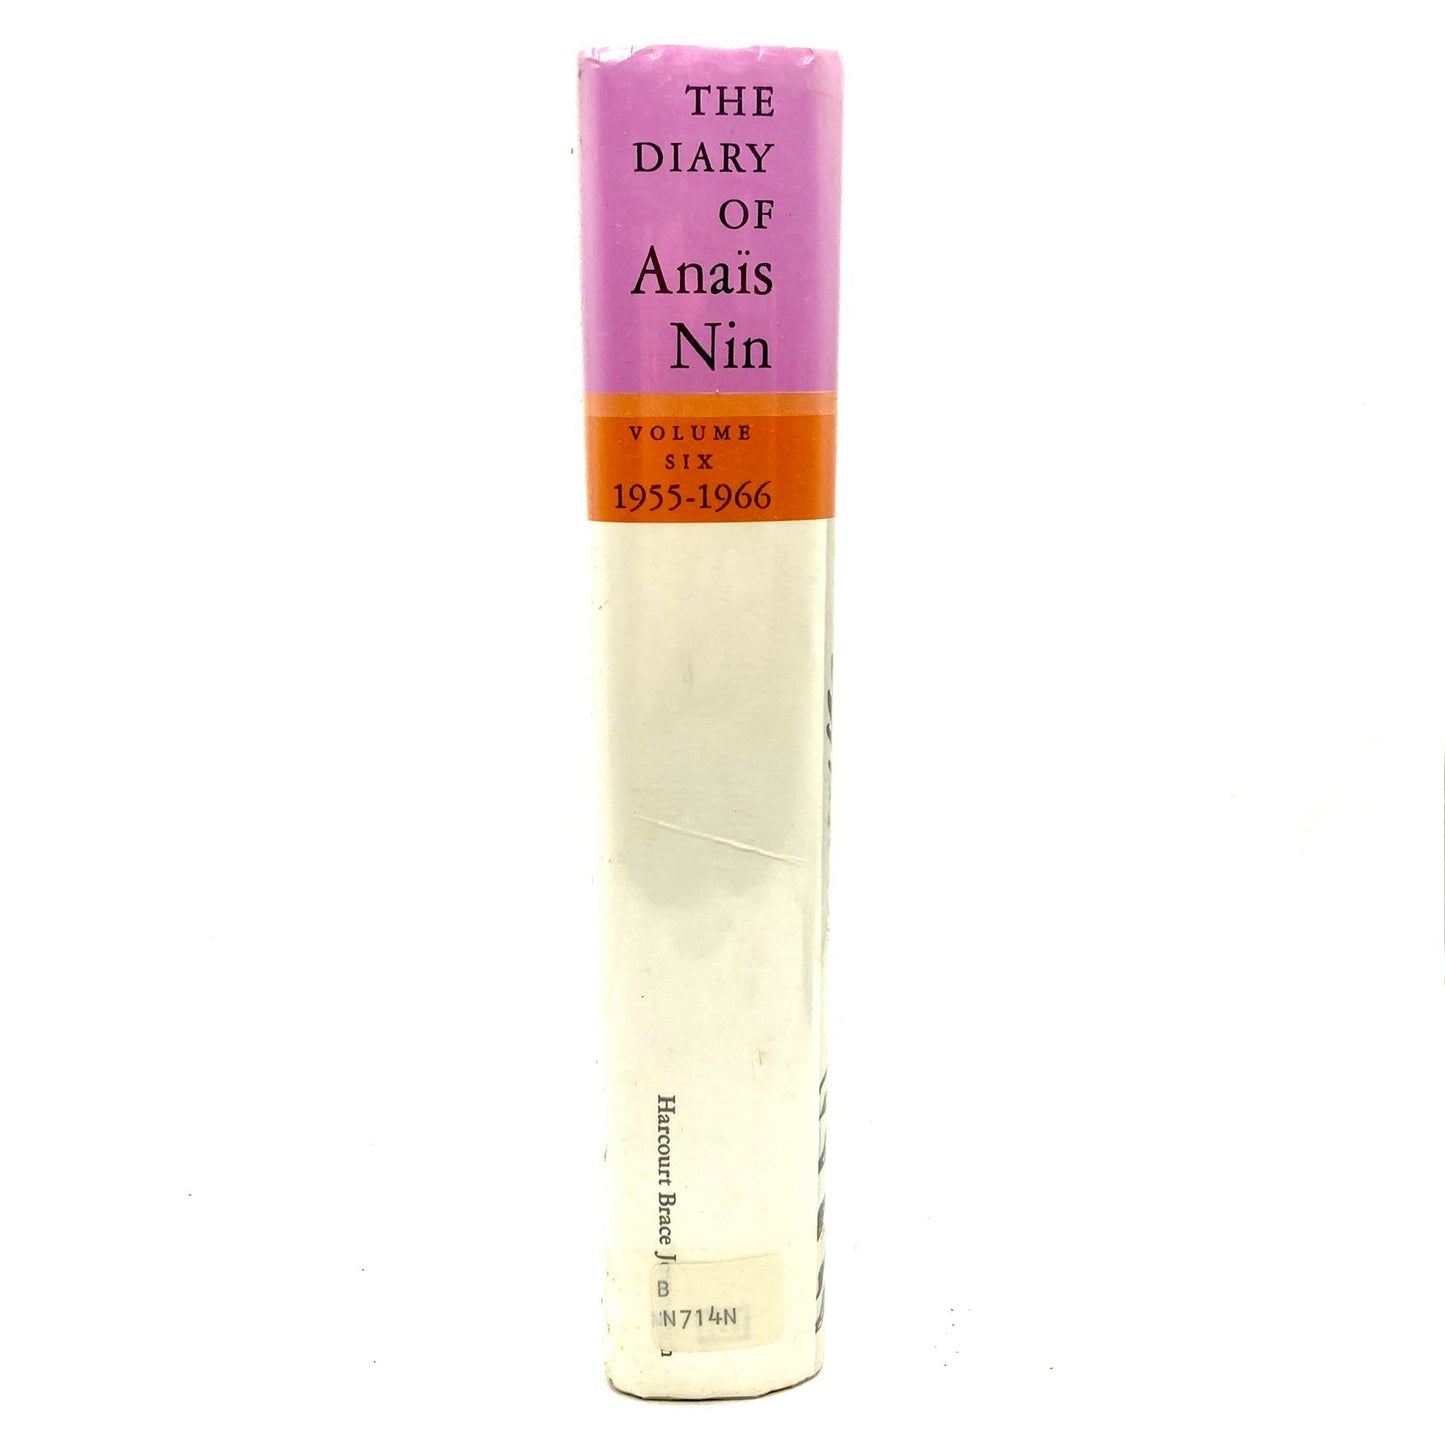 NIN, Anais "The Diary of Anais Nin, Volume Six" [Harcourt Brace Jovanovich, 1976] 1st/2nd